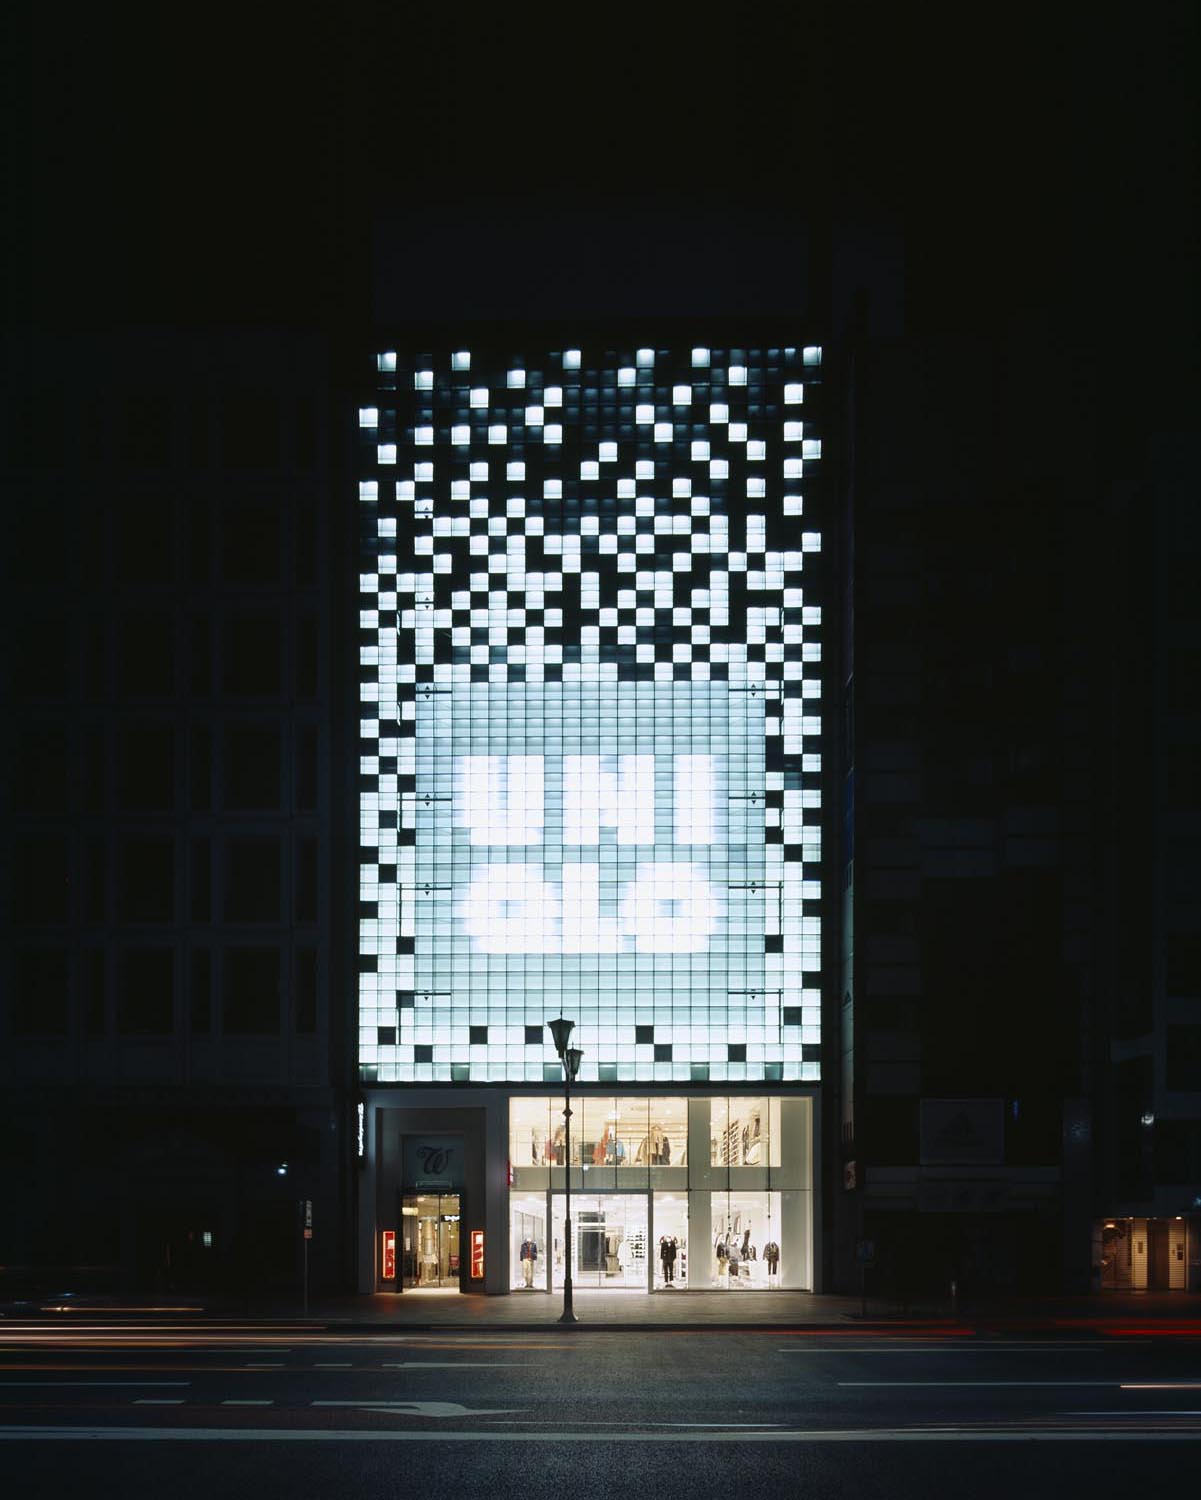 klein dytham architecture clads cartier store façade in geometric